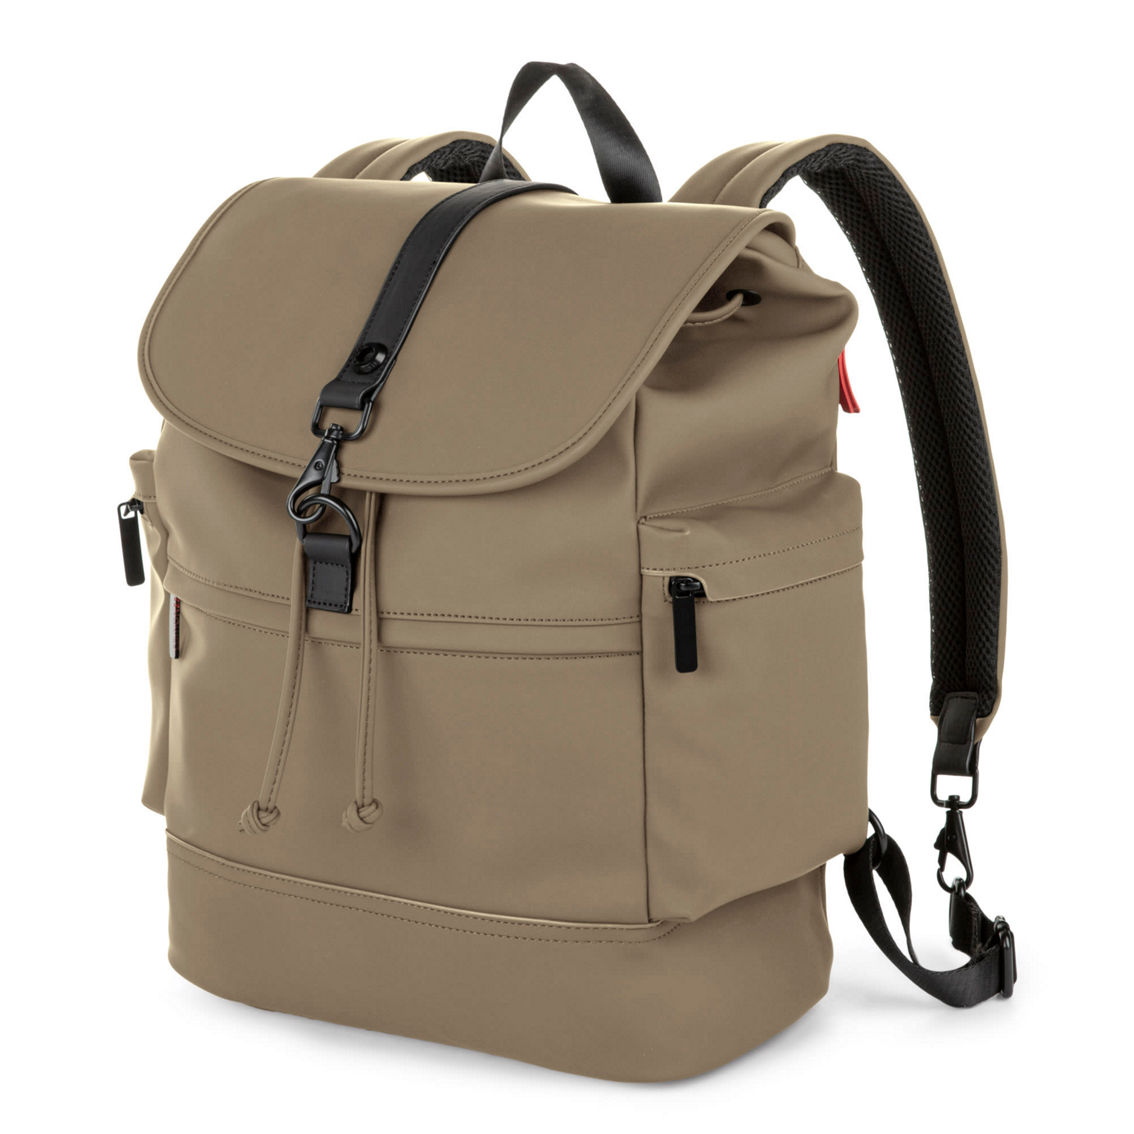 Core Backpack - Khaki - Image 2 of 5